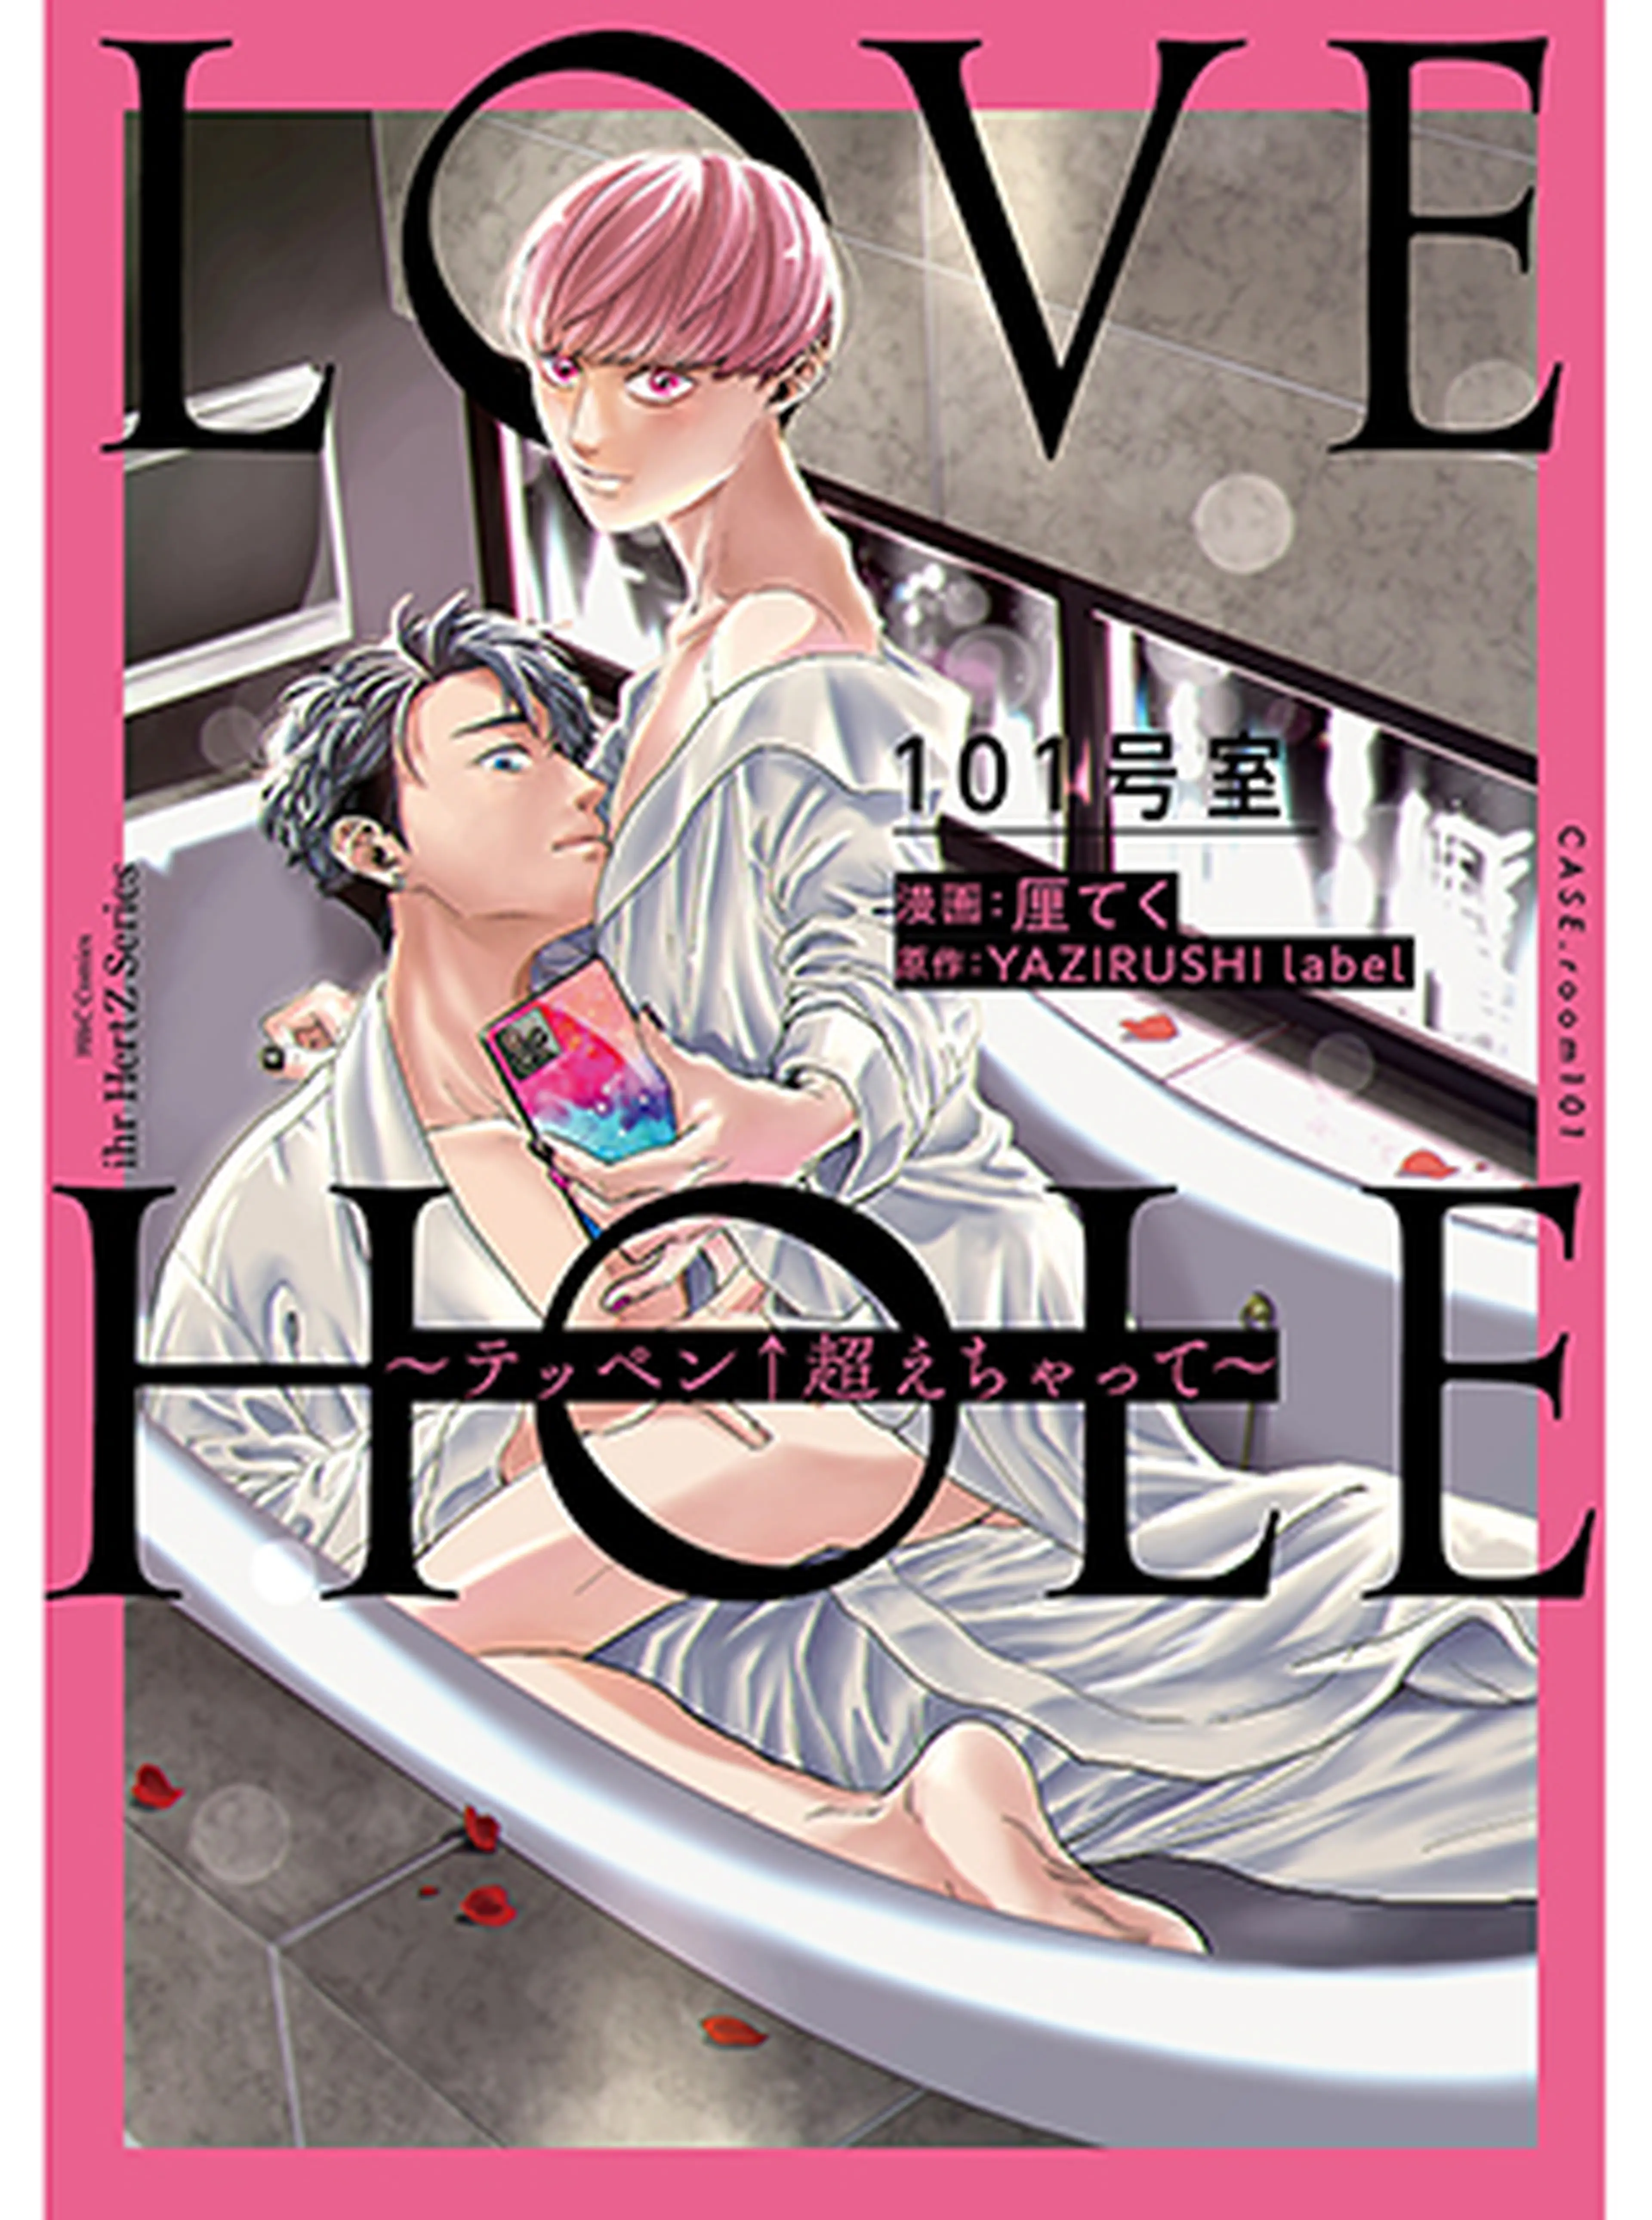 LOVE HOLE 101号室 202号室 303号室 アニメイト限定盤 | aeonenergy.co.nz